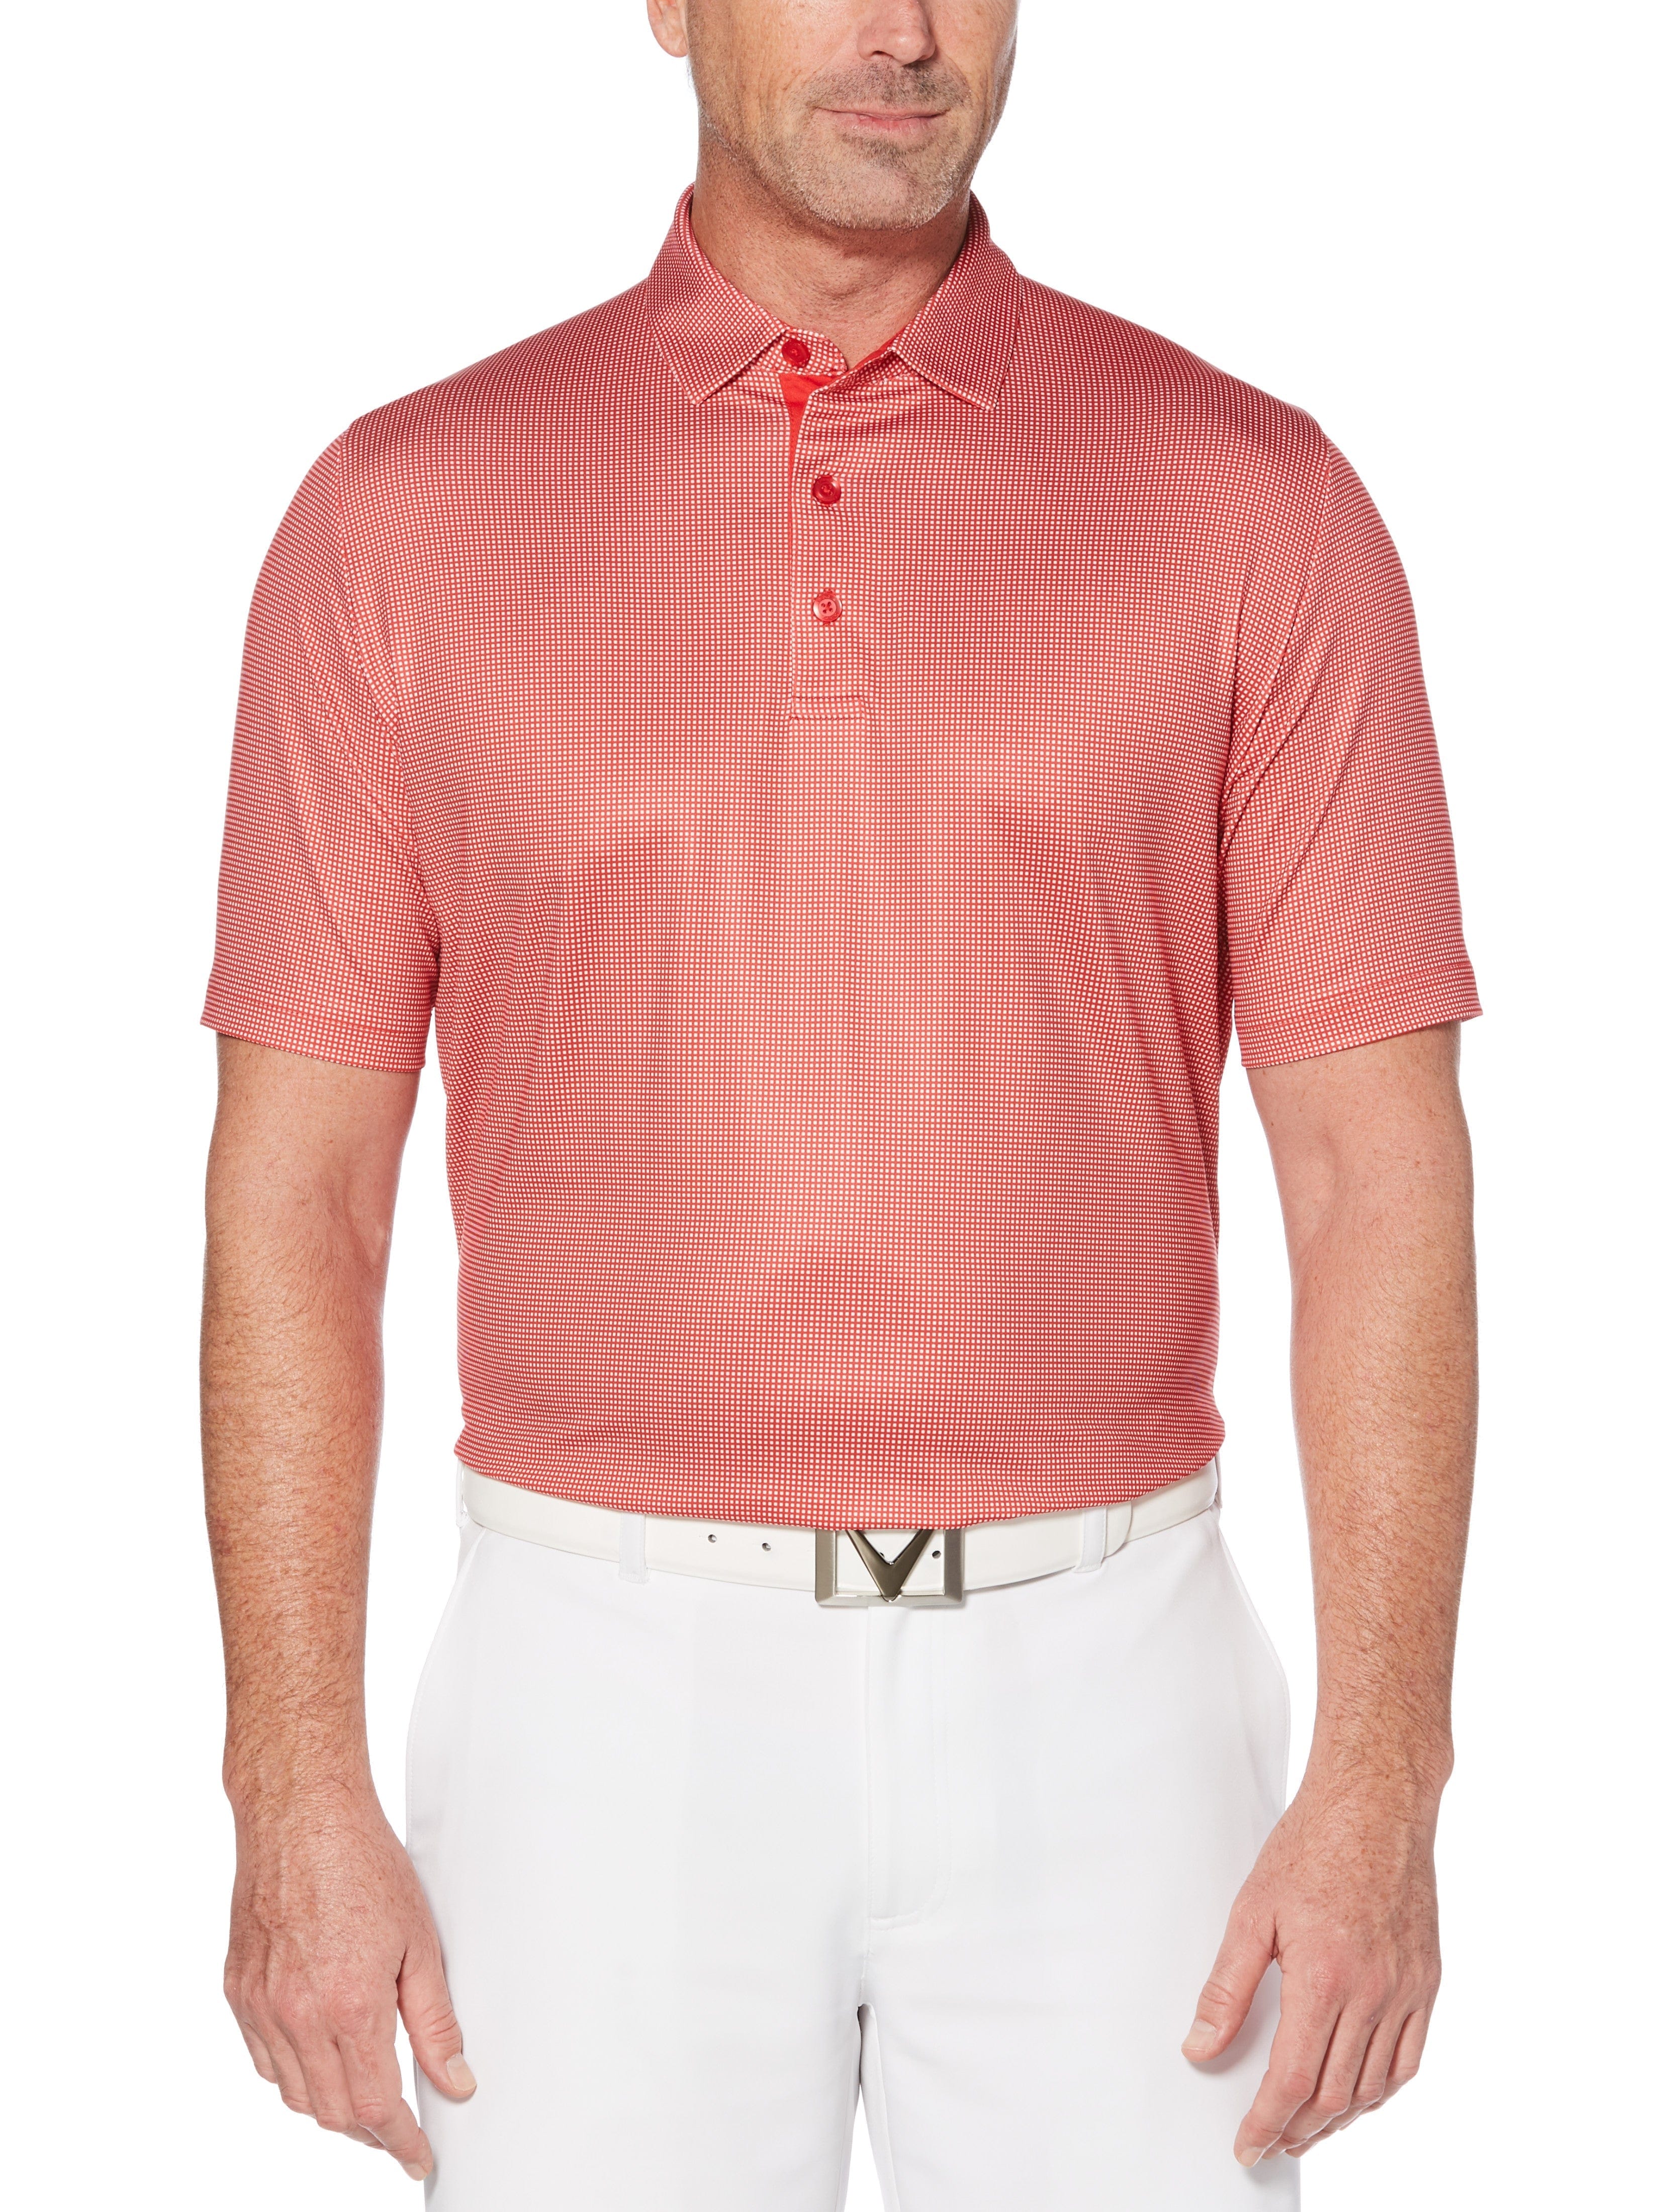 Callaway Apparel Mens Swing Tech Printed Gingham Polo Shirt, Size Small, Tango Red, Polyester/Elastane | Golf Apparel Shop